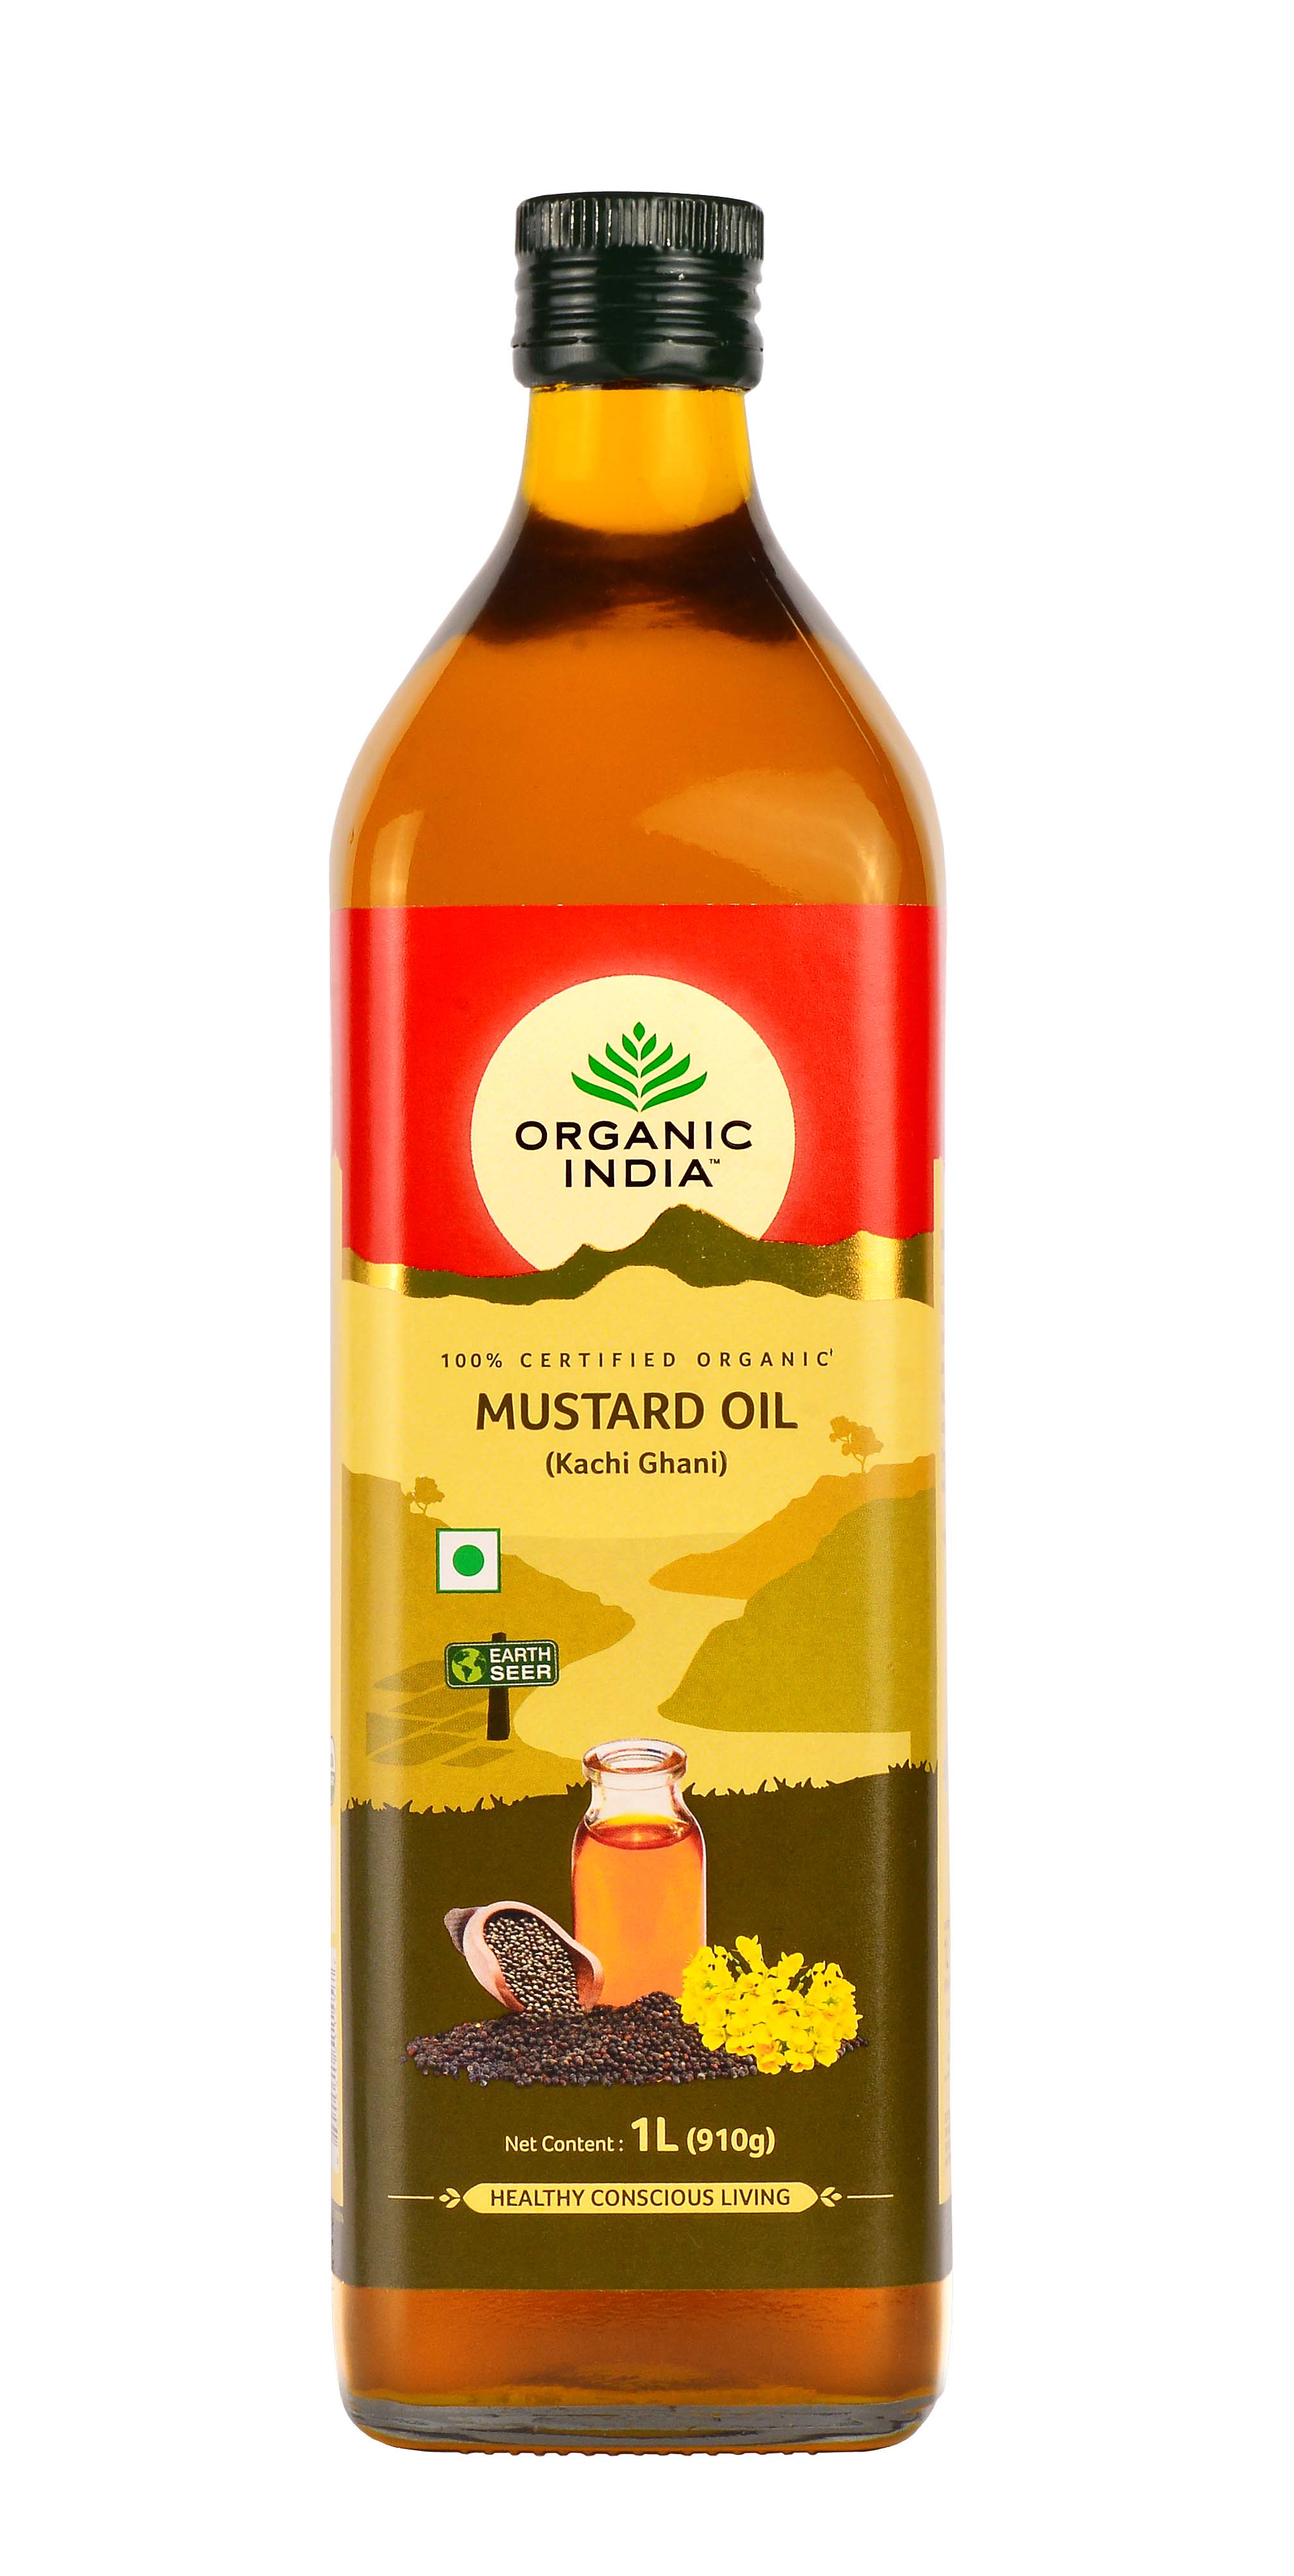 Buy Organic India Mustard oil at Best Price Online